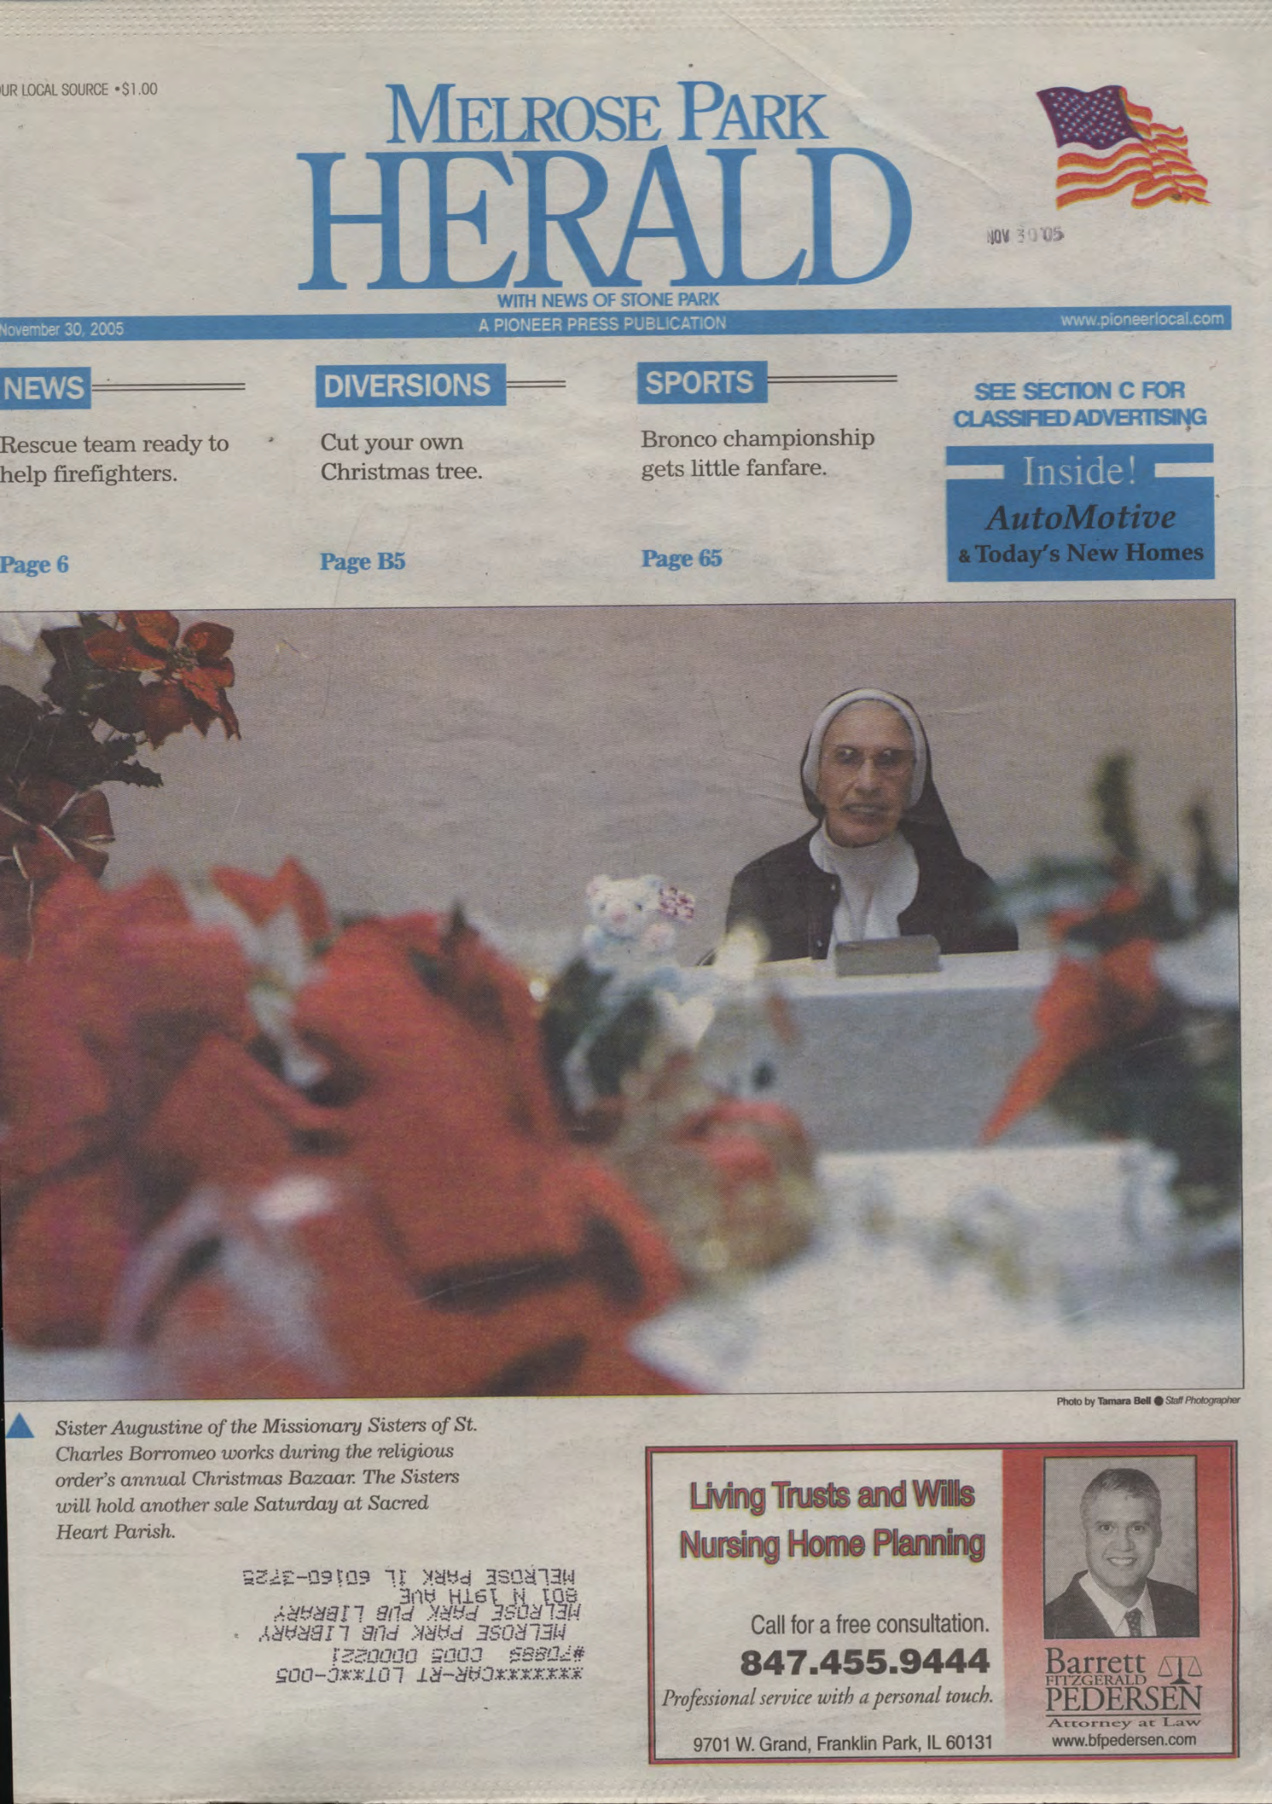 The Herald – 20051130